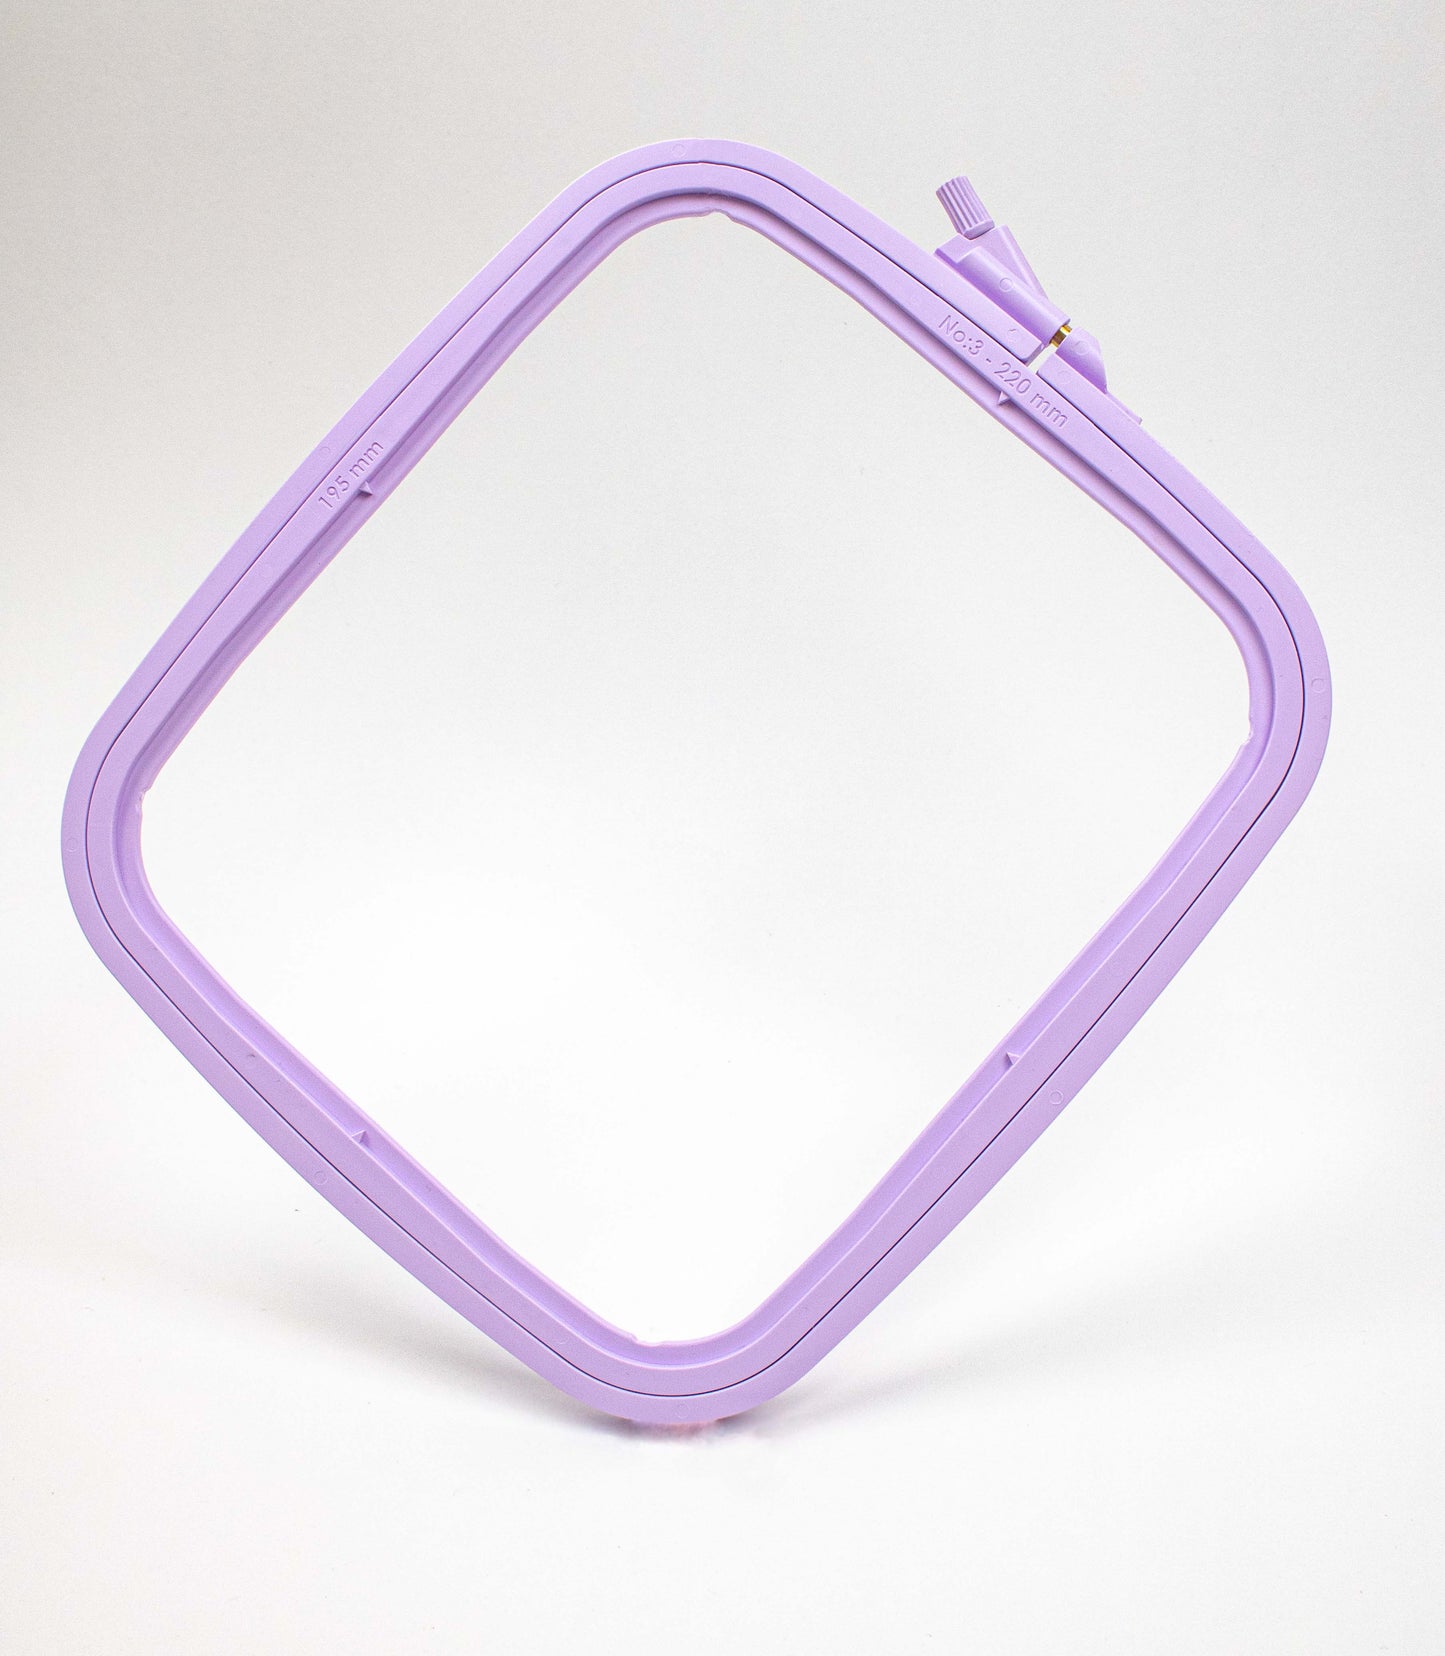 Квадратный пластик Nurge Pastel Violet, 300